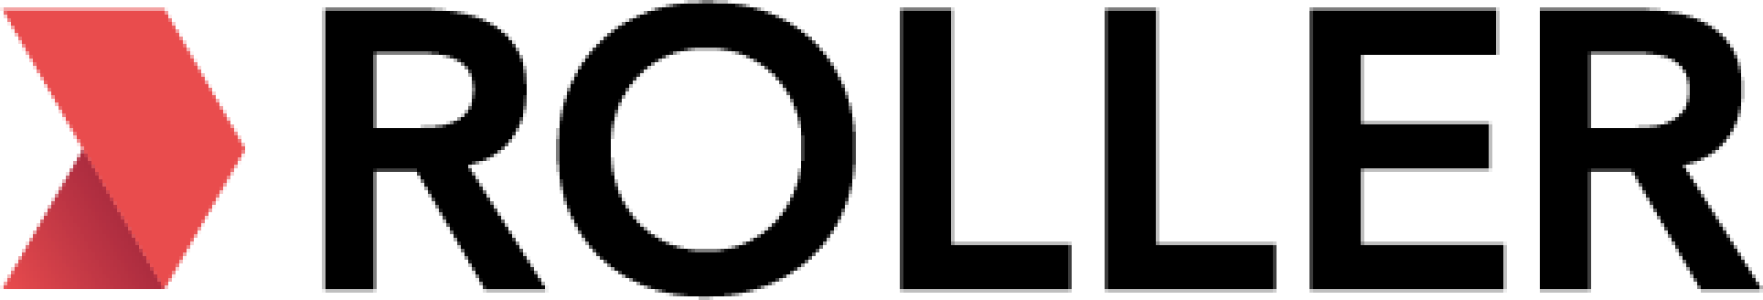 Roller-Software-Logo